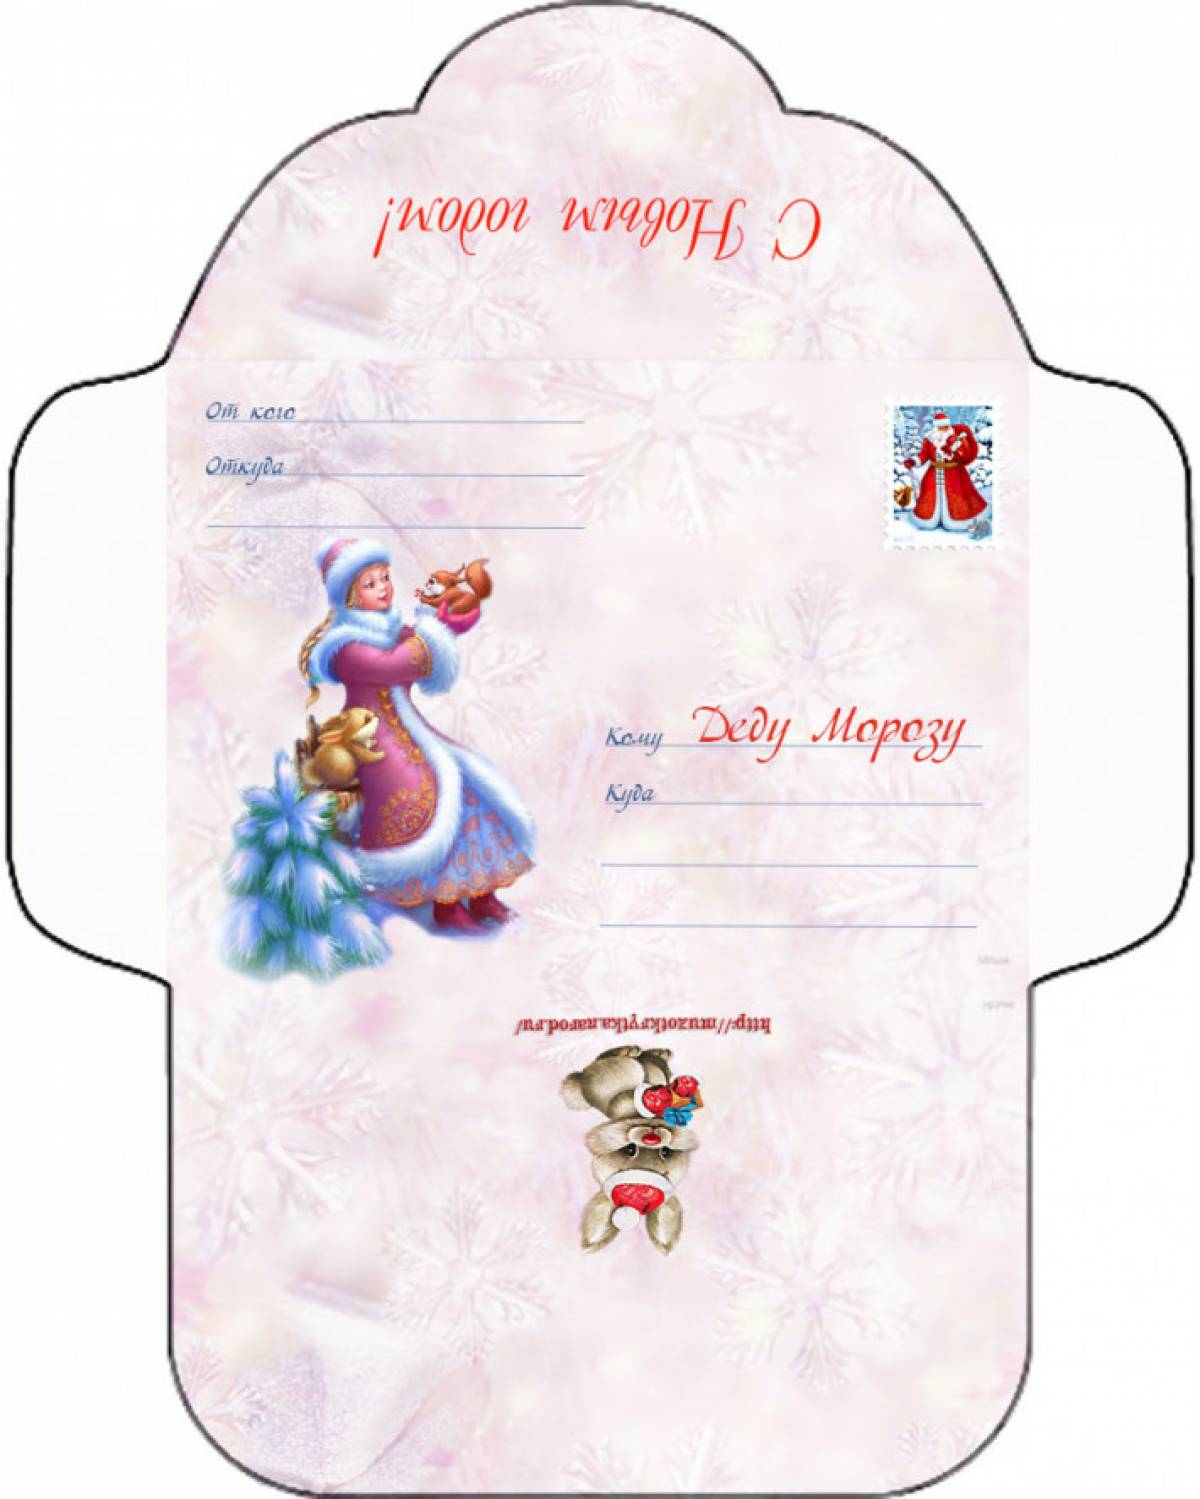 Envelope to Santa Claus with Snow Maiden